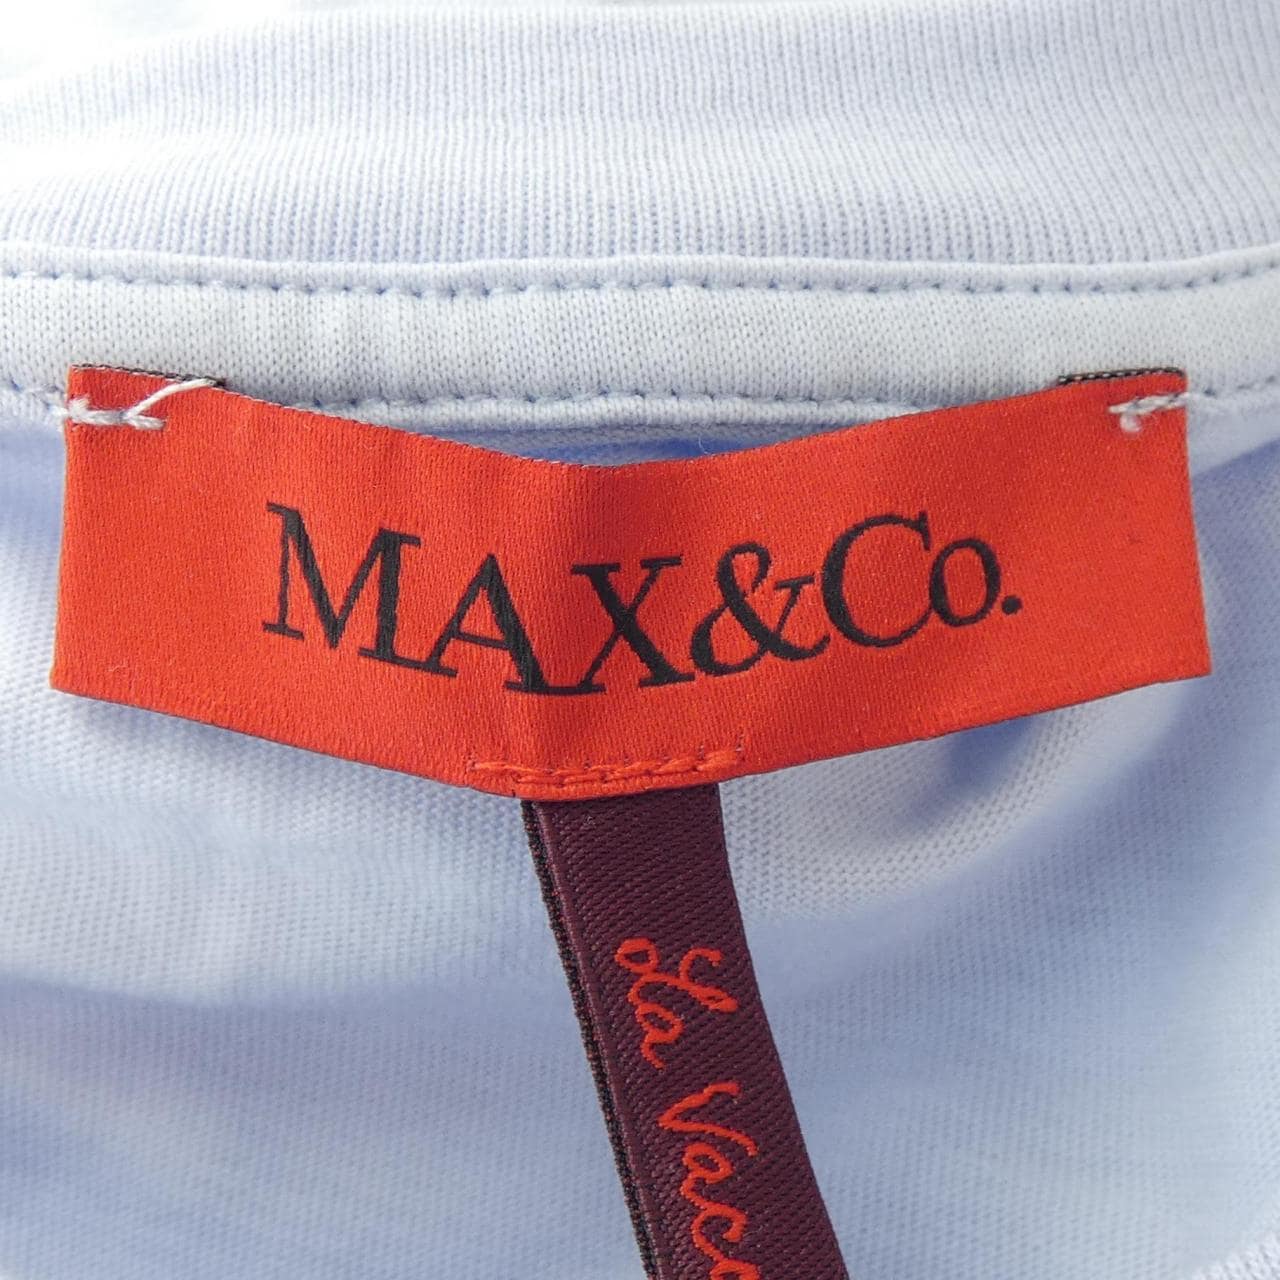 超棒Max&Co上衣